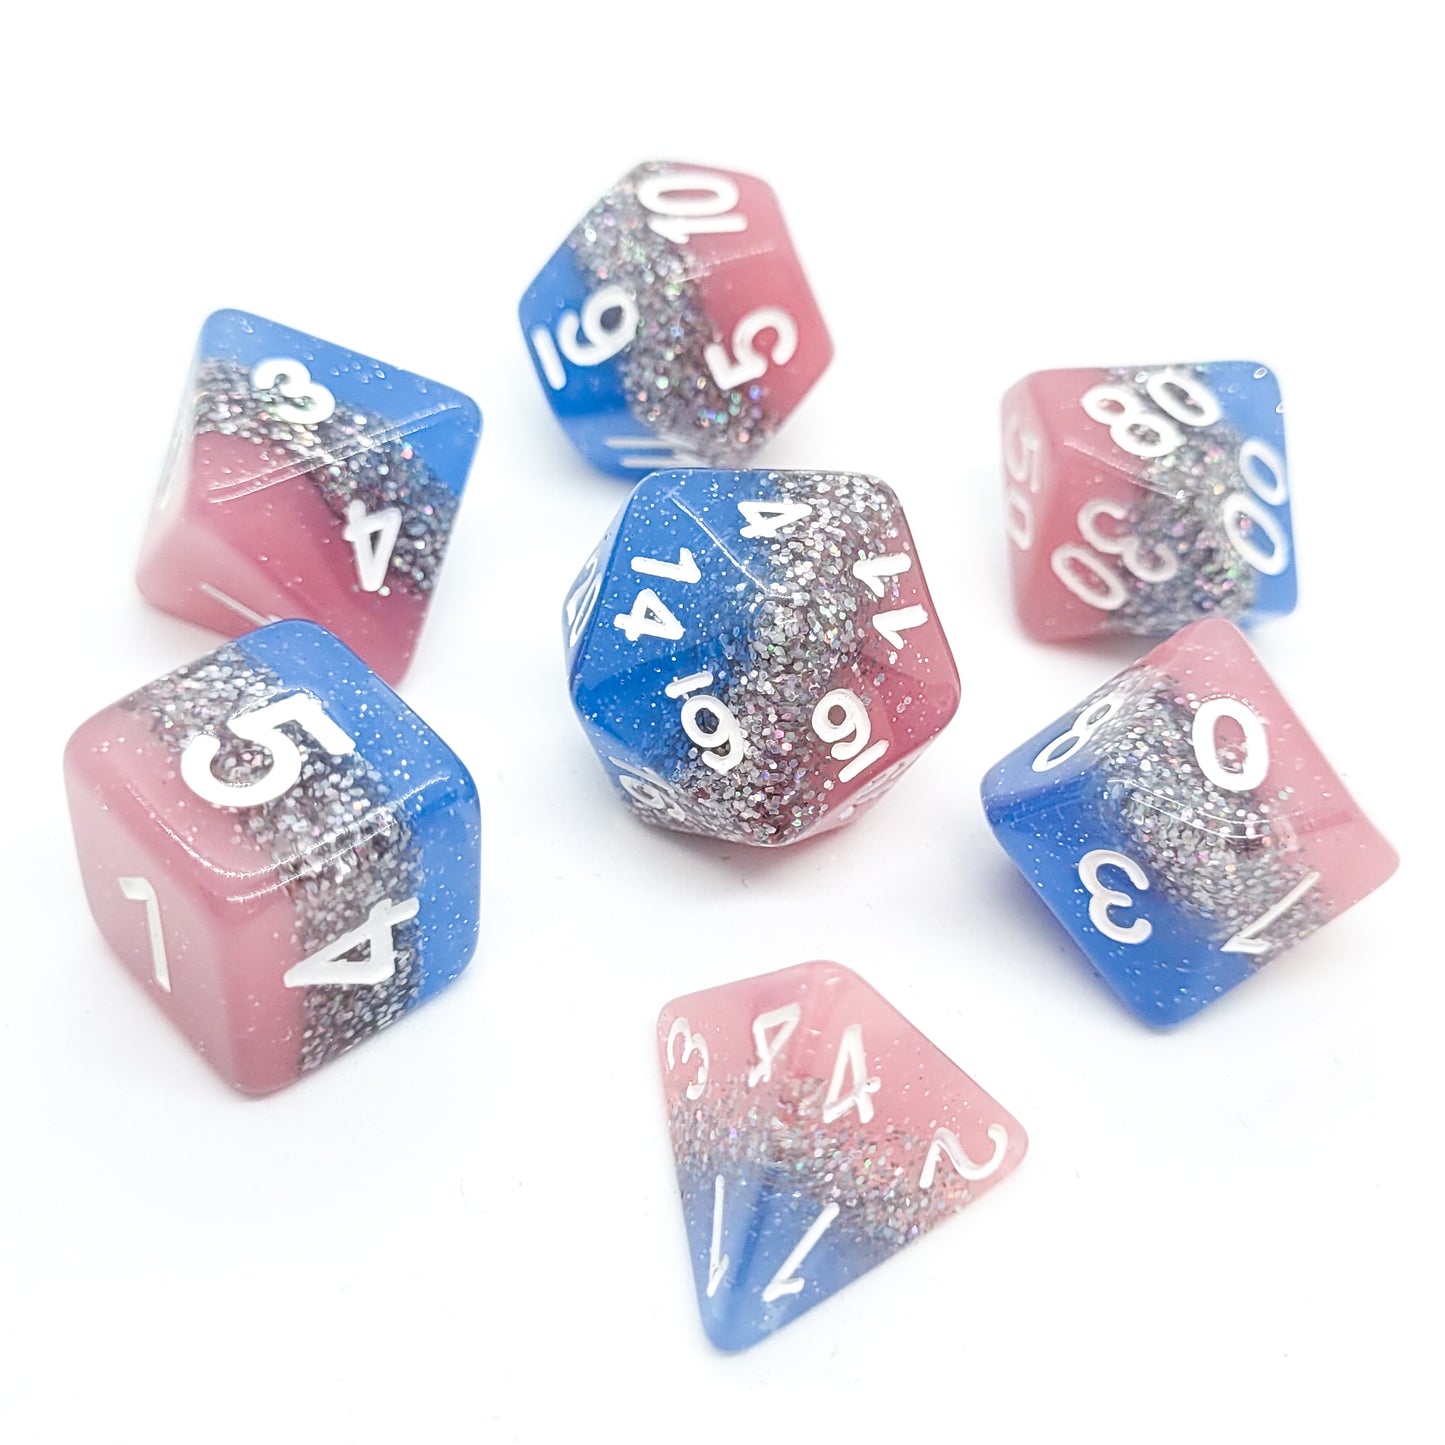 Transitional - Layered Glitter dice set - 7 piece RPG dice set